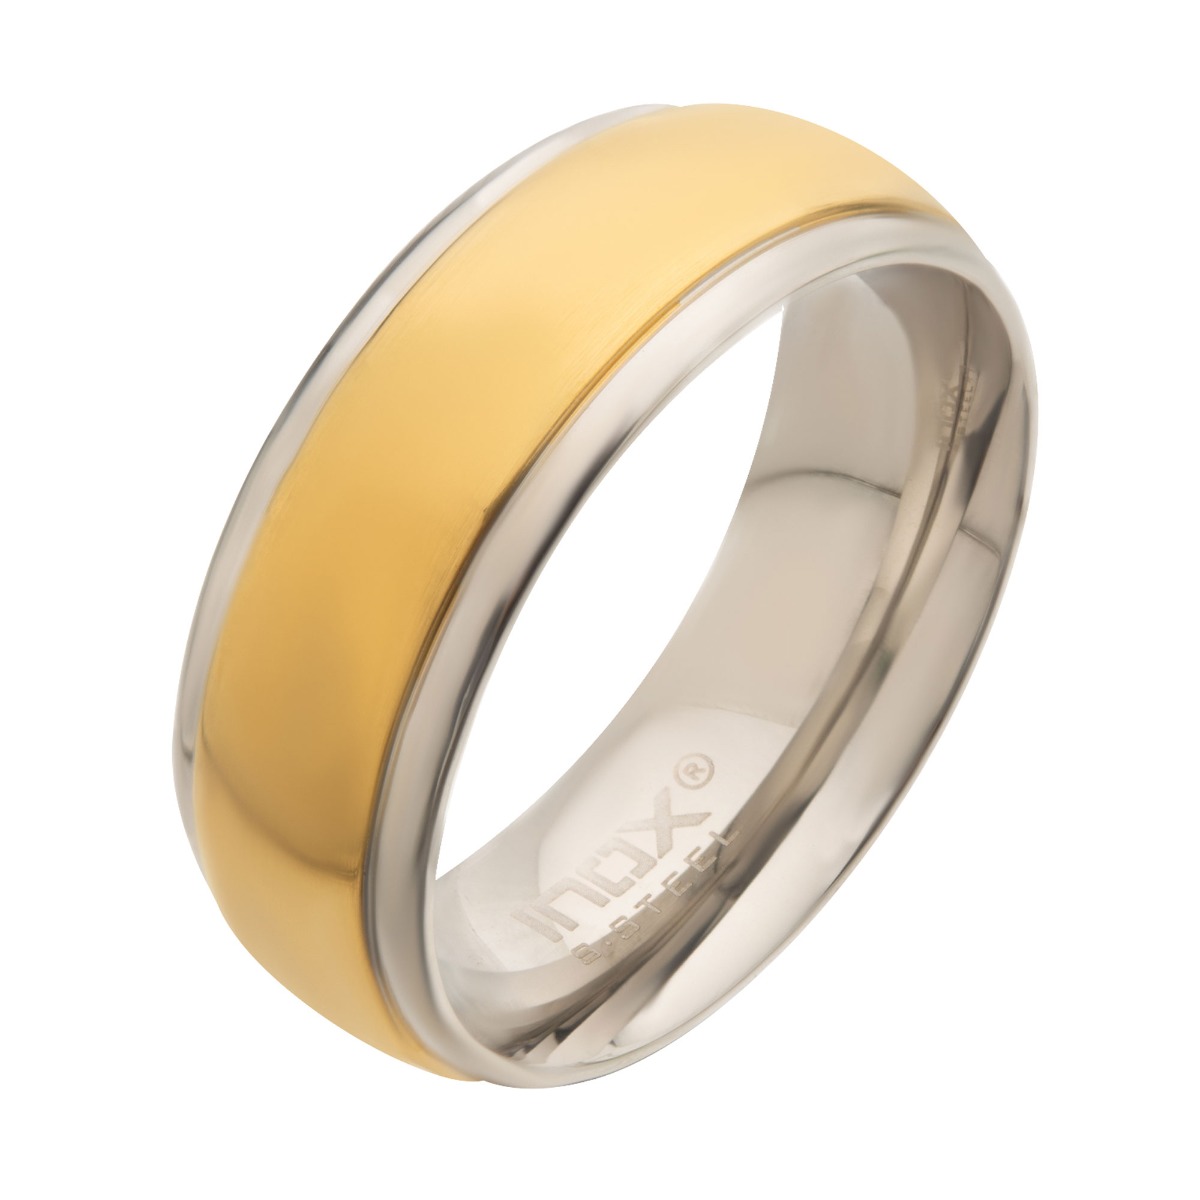 Steel & Gold Plated Patterned Design Ring P.K. Bennett Jewelers Mundelein, IL